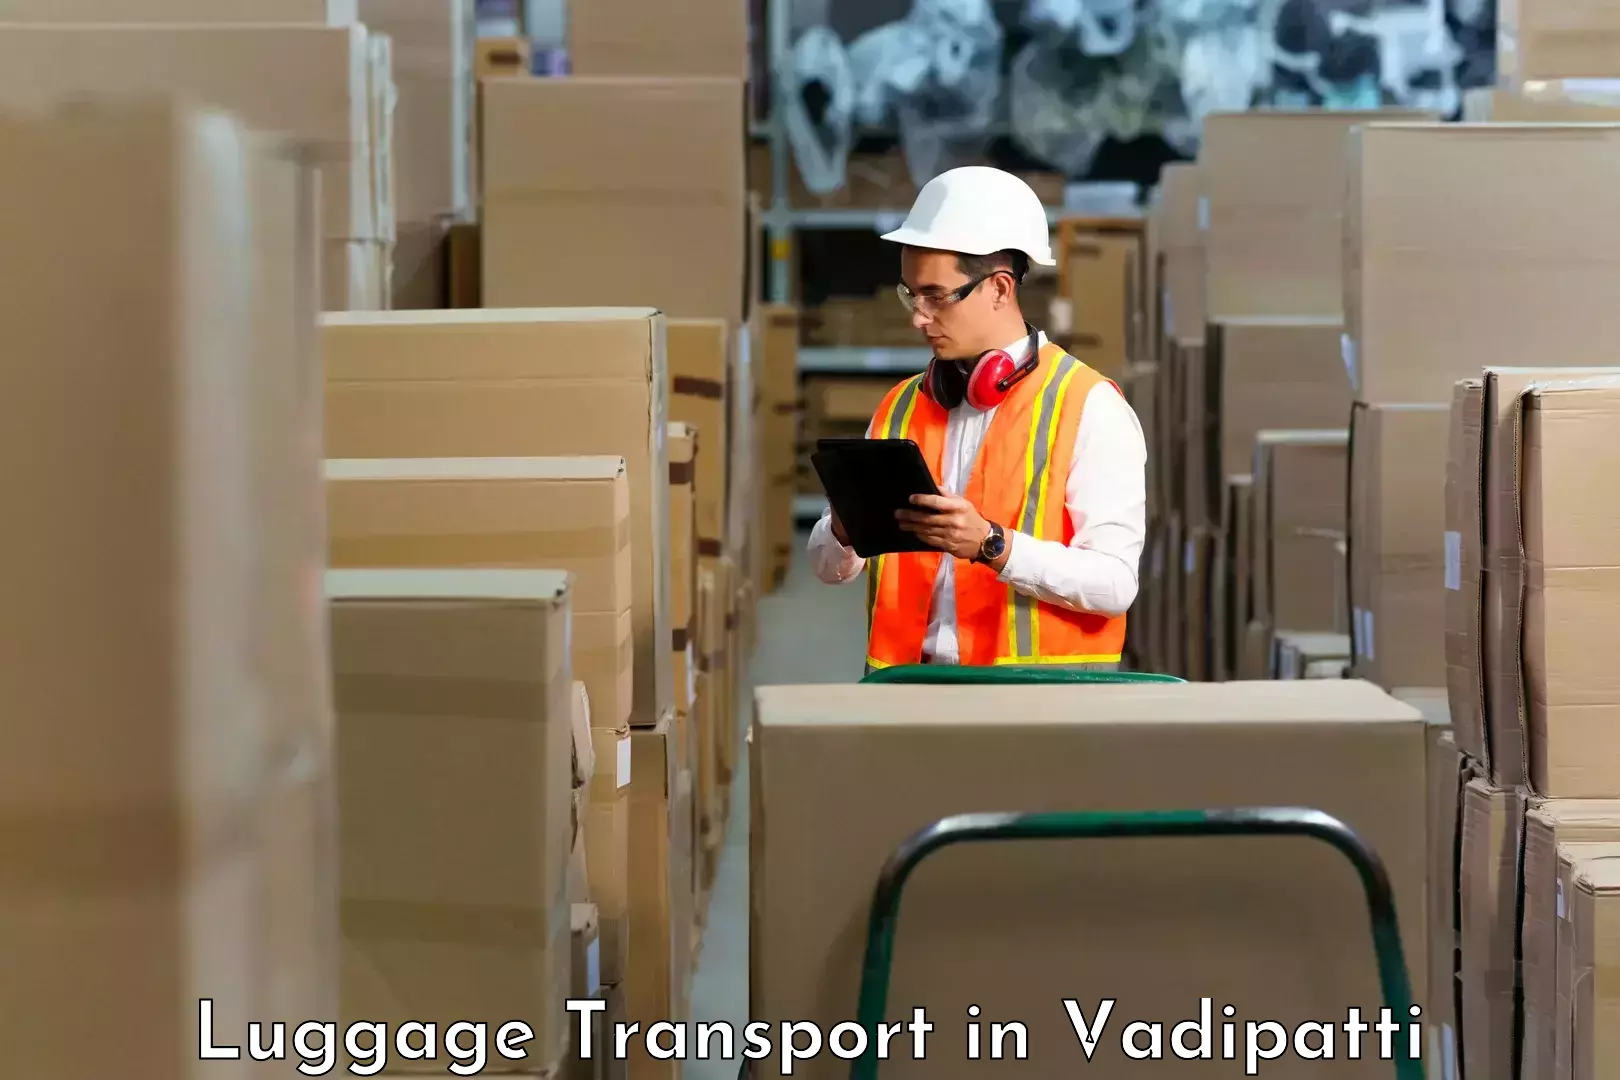 Luggage shipment processing in Vadipatti